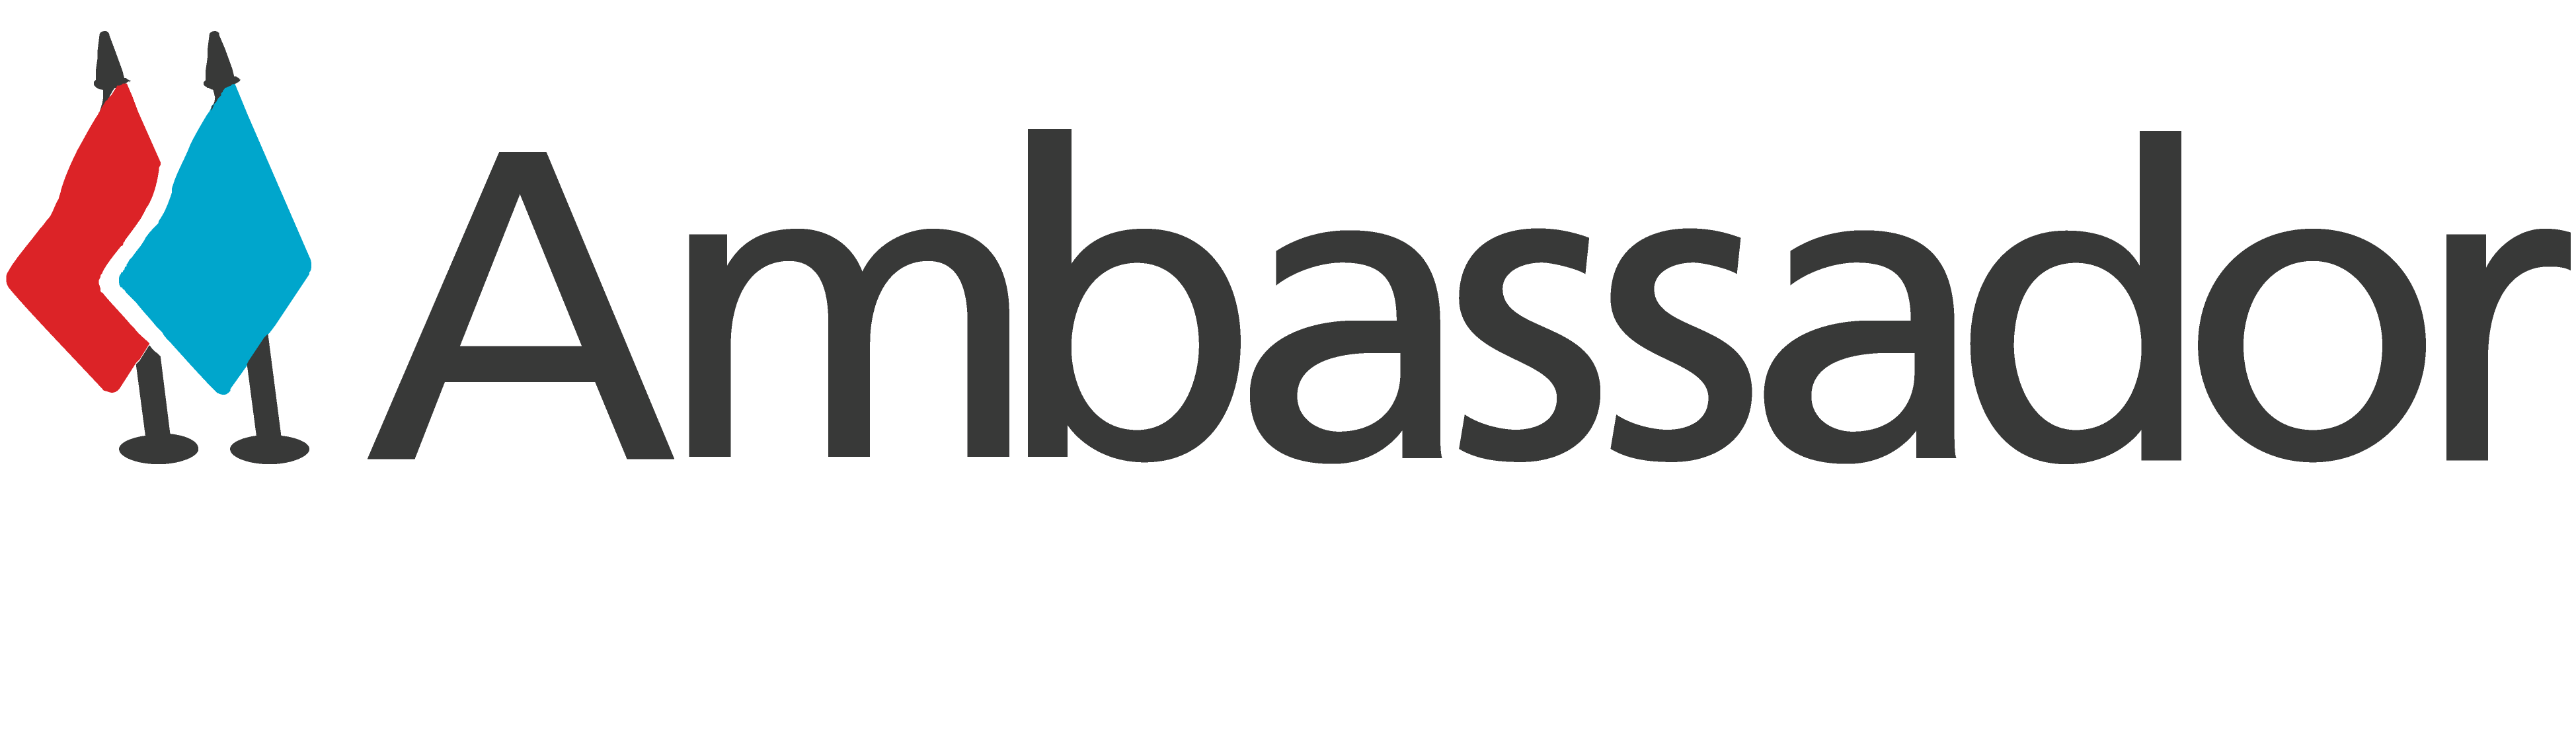 ambassador-logo_black_2019@2x-1